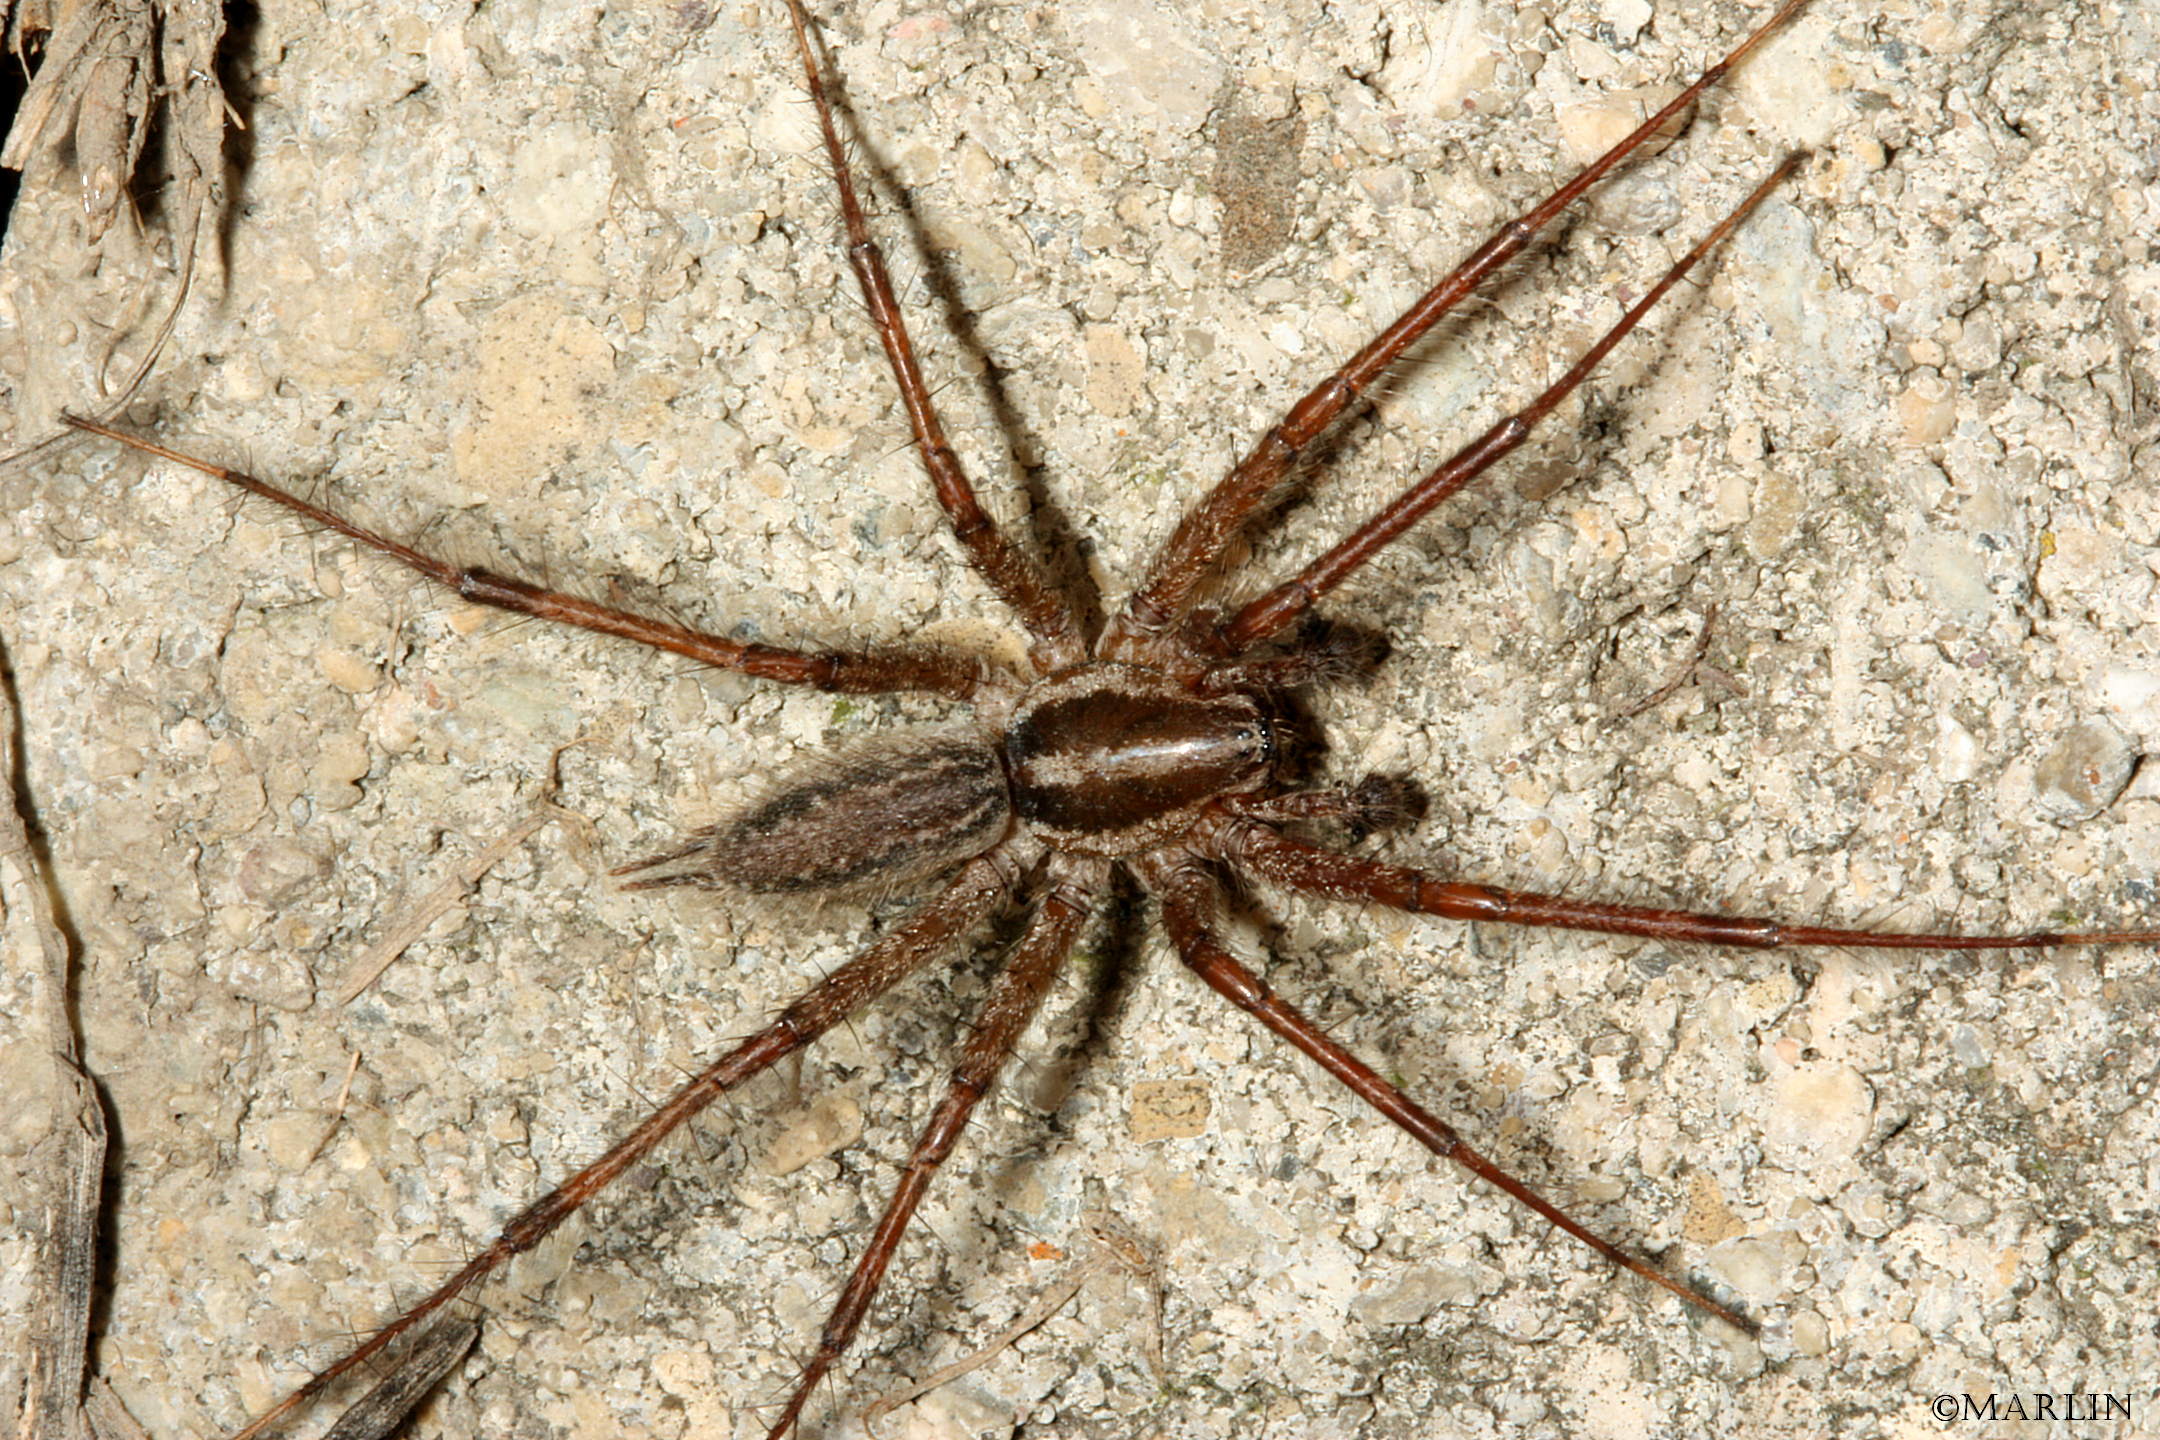 Grass spider dorsal 2022